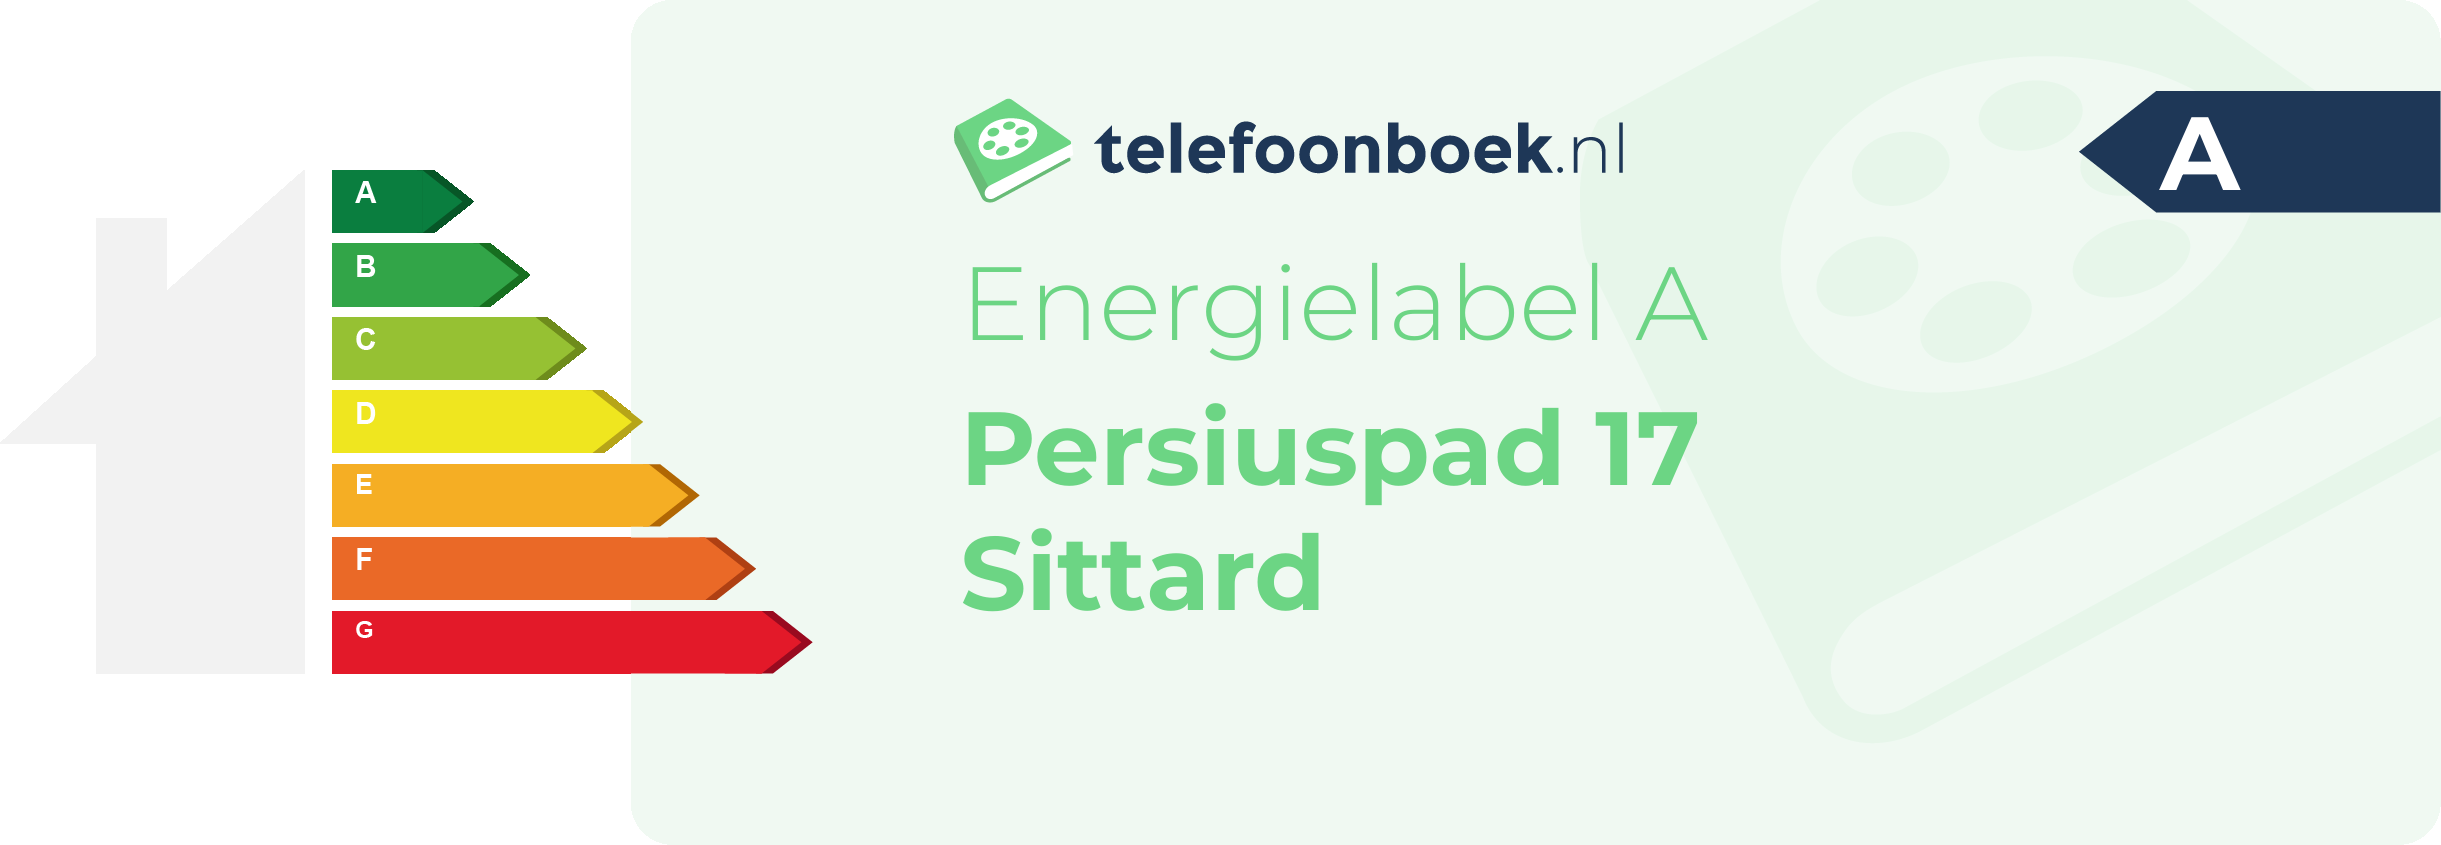 Energielabel Persiuspad 17 Sittard